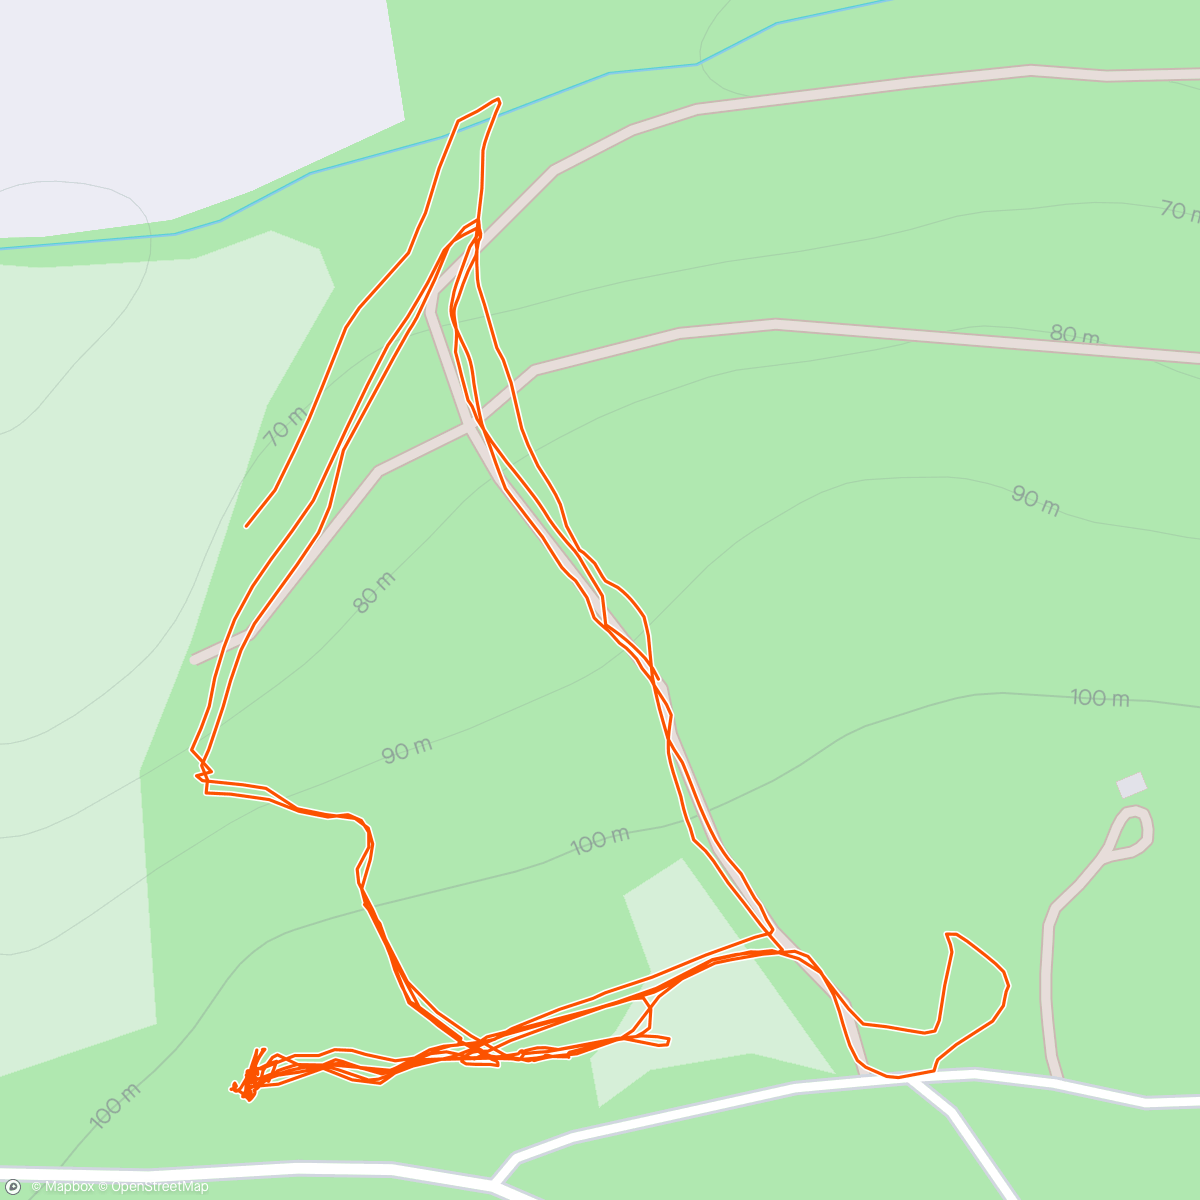 Карта физической активности (Kernow bike park; downhill)